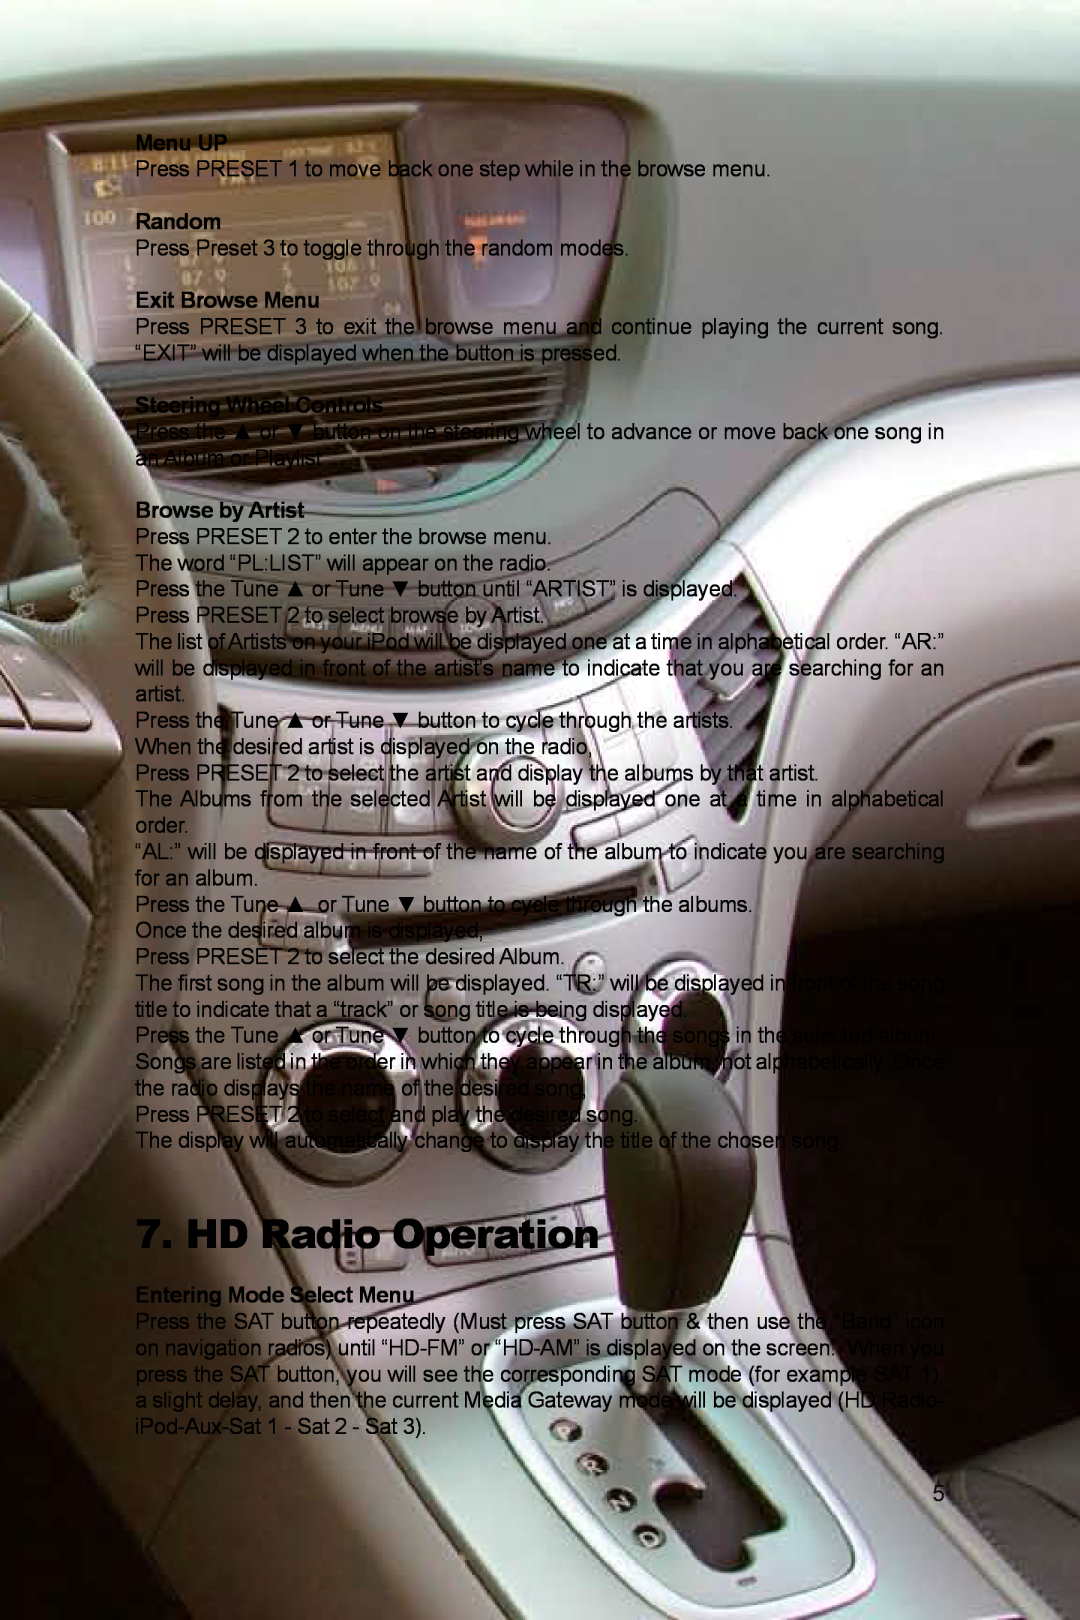 Peripheral Electronics PGHSB1 owner manual HD Radio Operation, Menu UP, Random, Exit Browse Menu, Steering Wheel Controls 